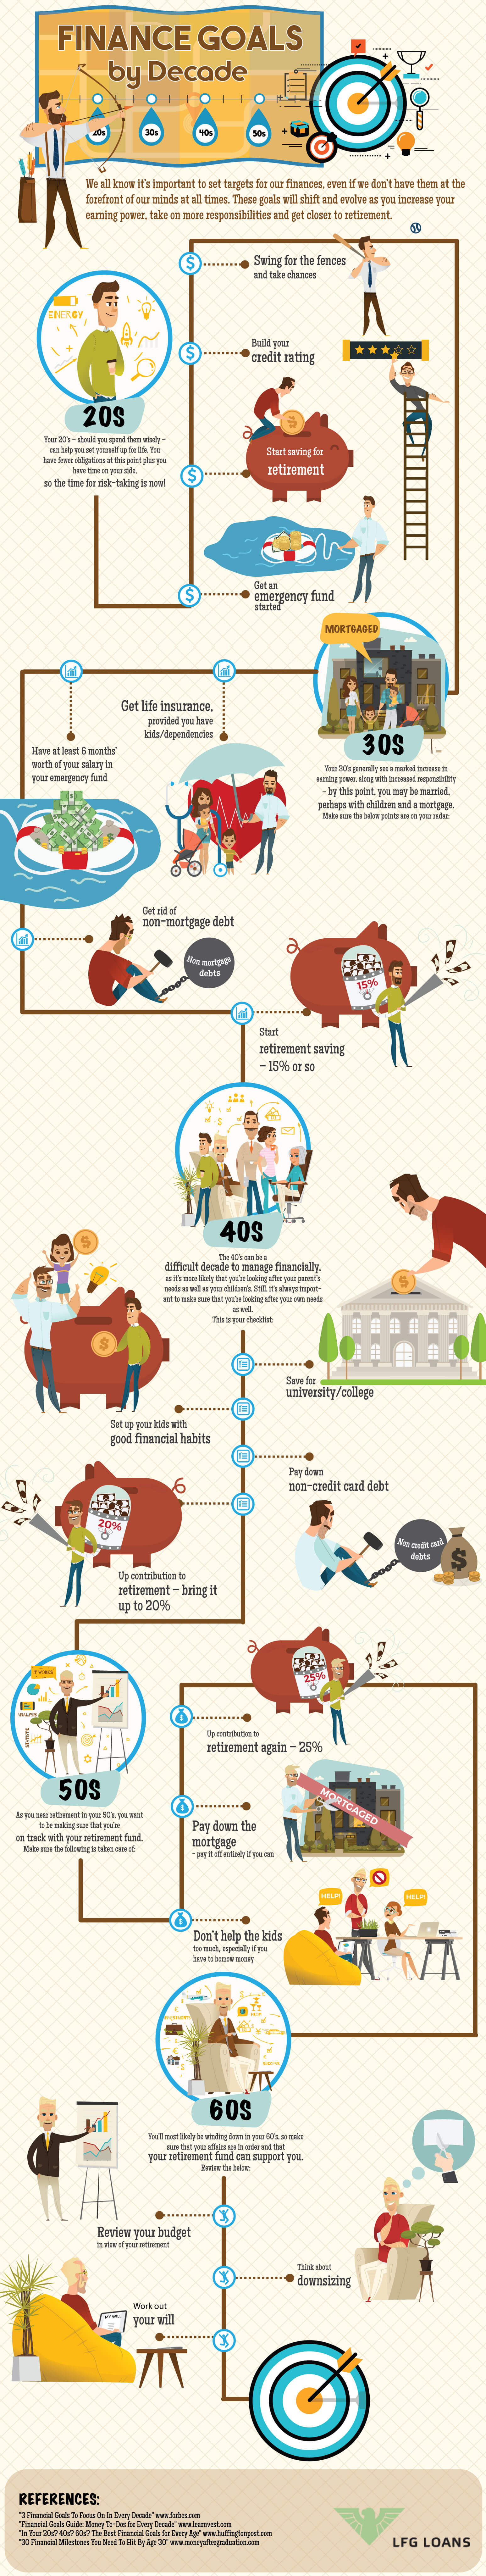 Finance_Goals_infographic